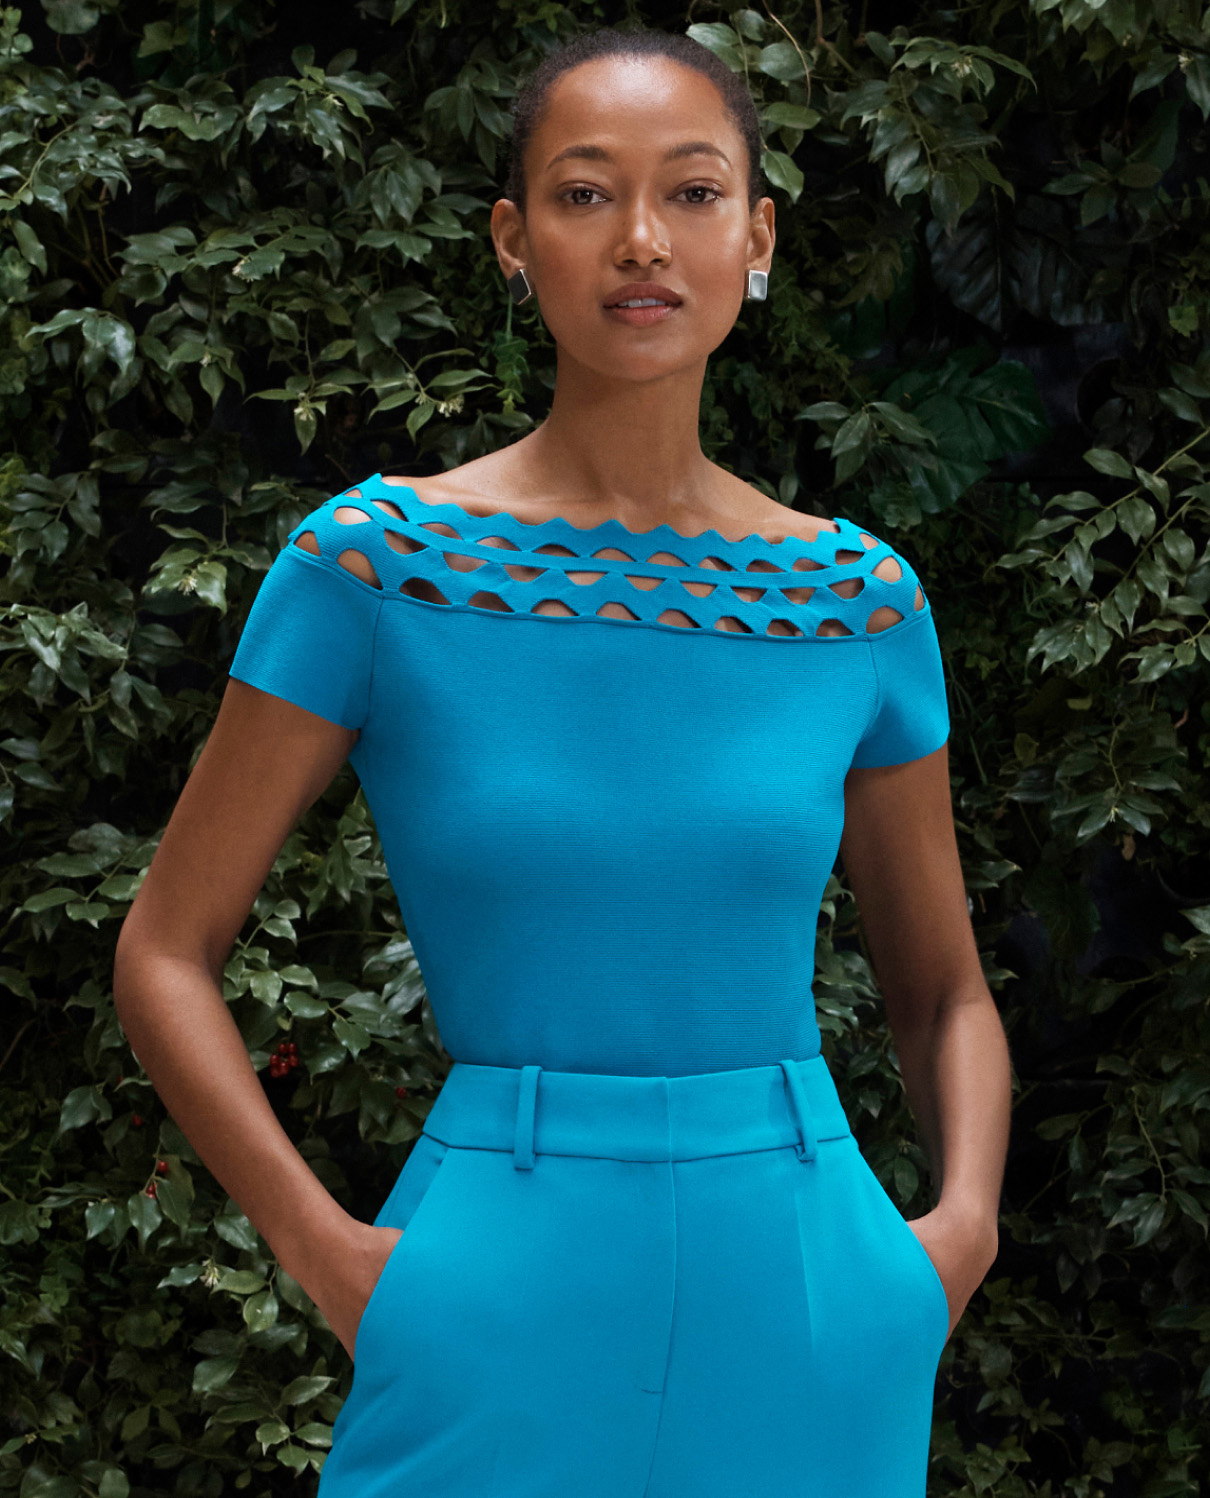 Model wearing turquoise Porto top